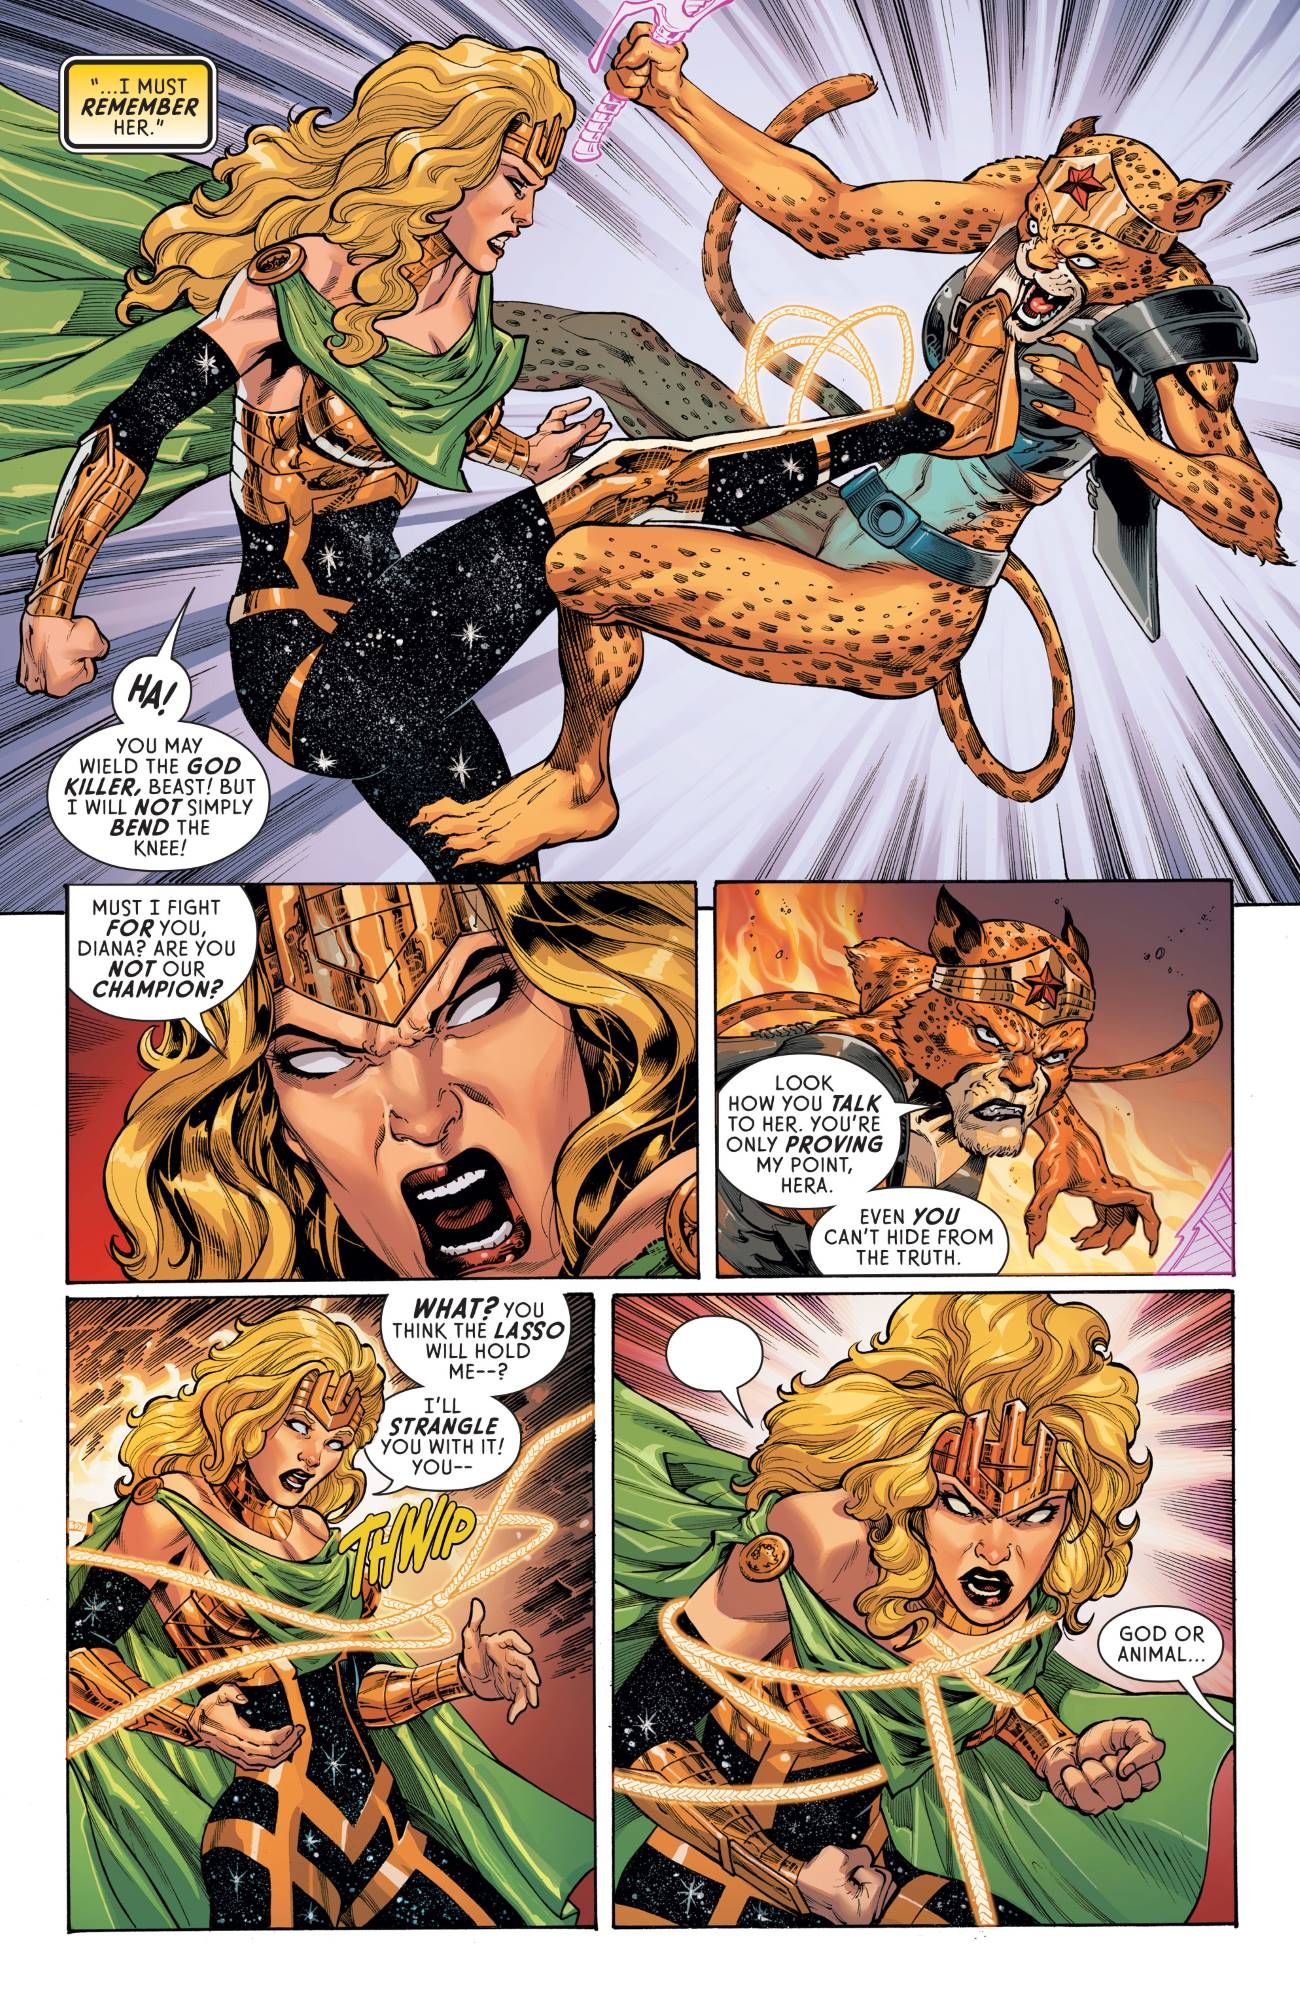 Wonder Woman 750 Comic Hera vs Cheetah